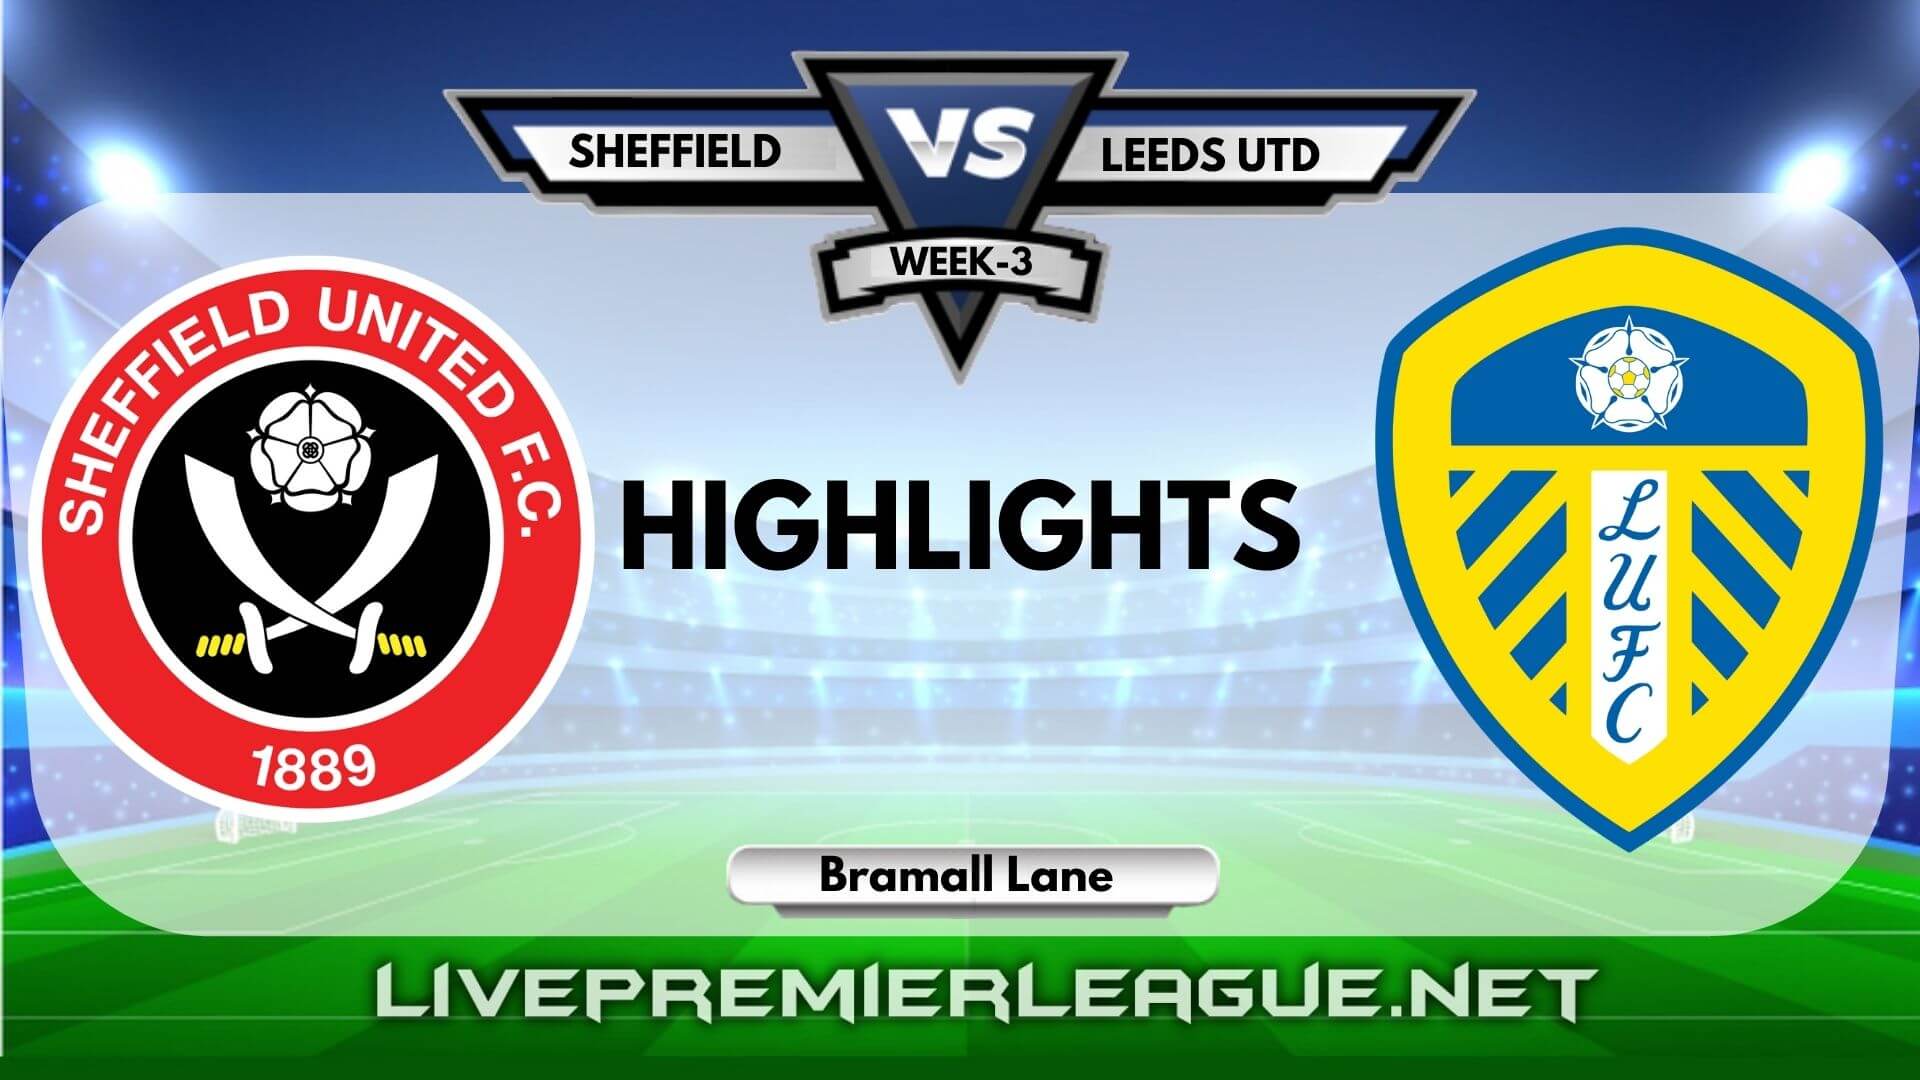 Sheffield United Vs Leeds United Highlights 2020 EPL Week 3